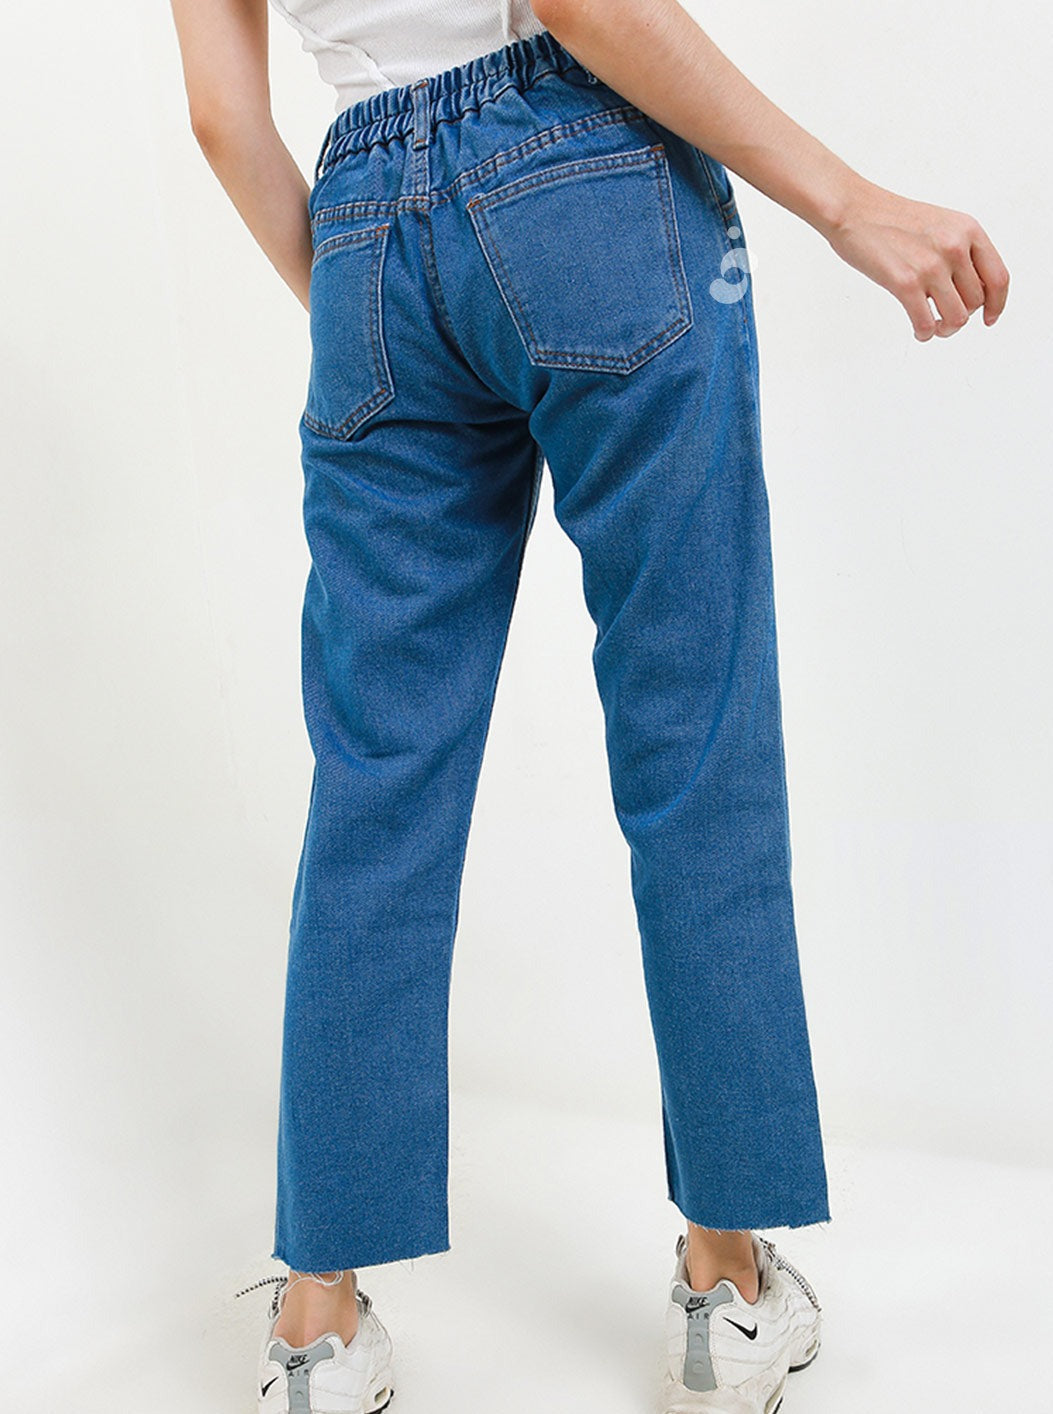 Kinsley Jeans